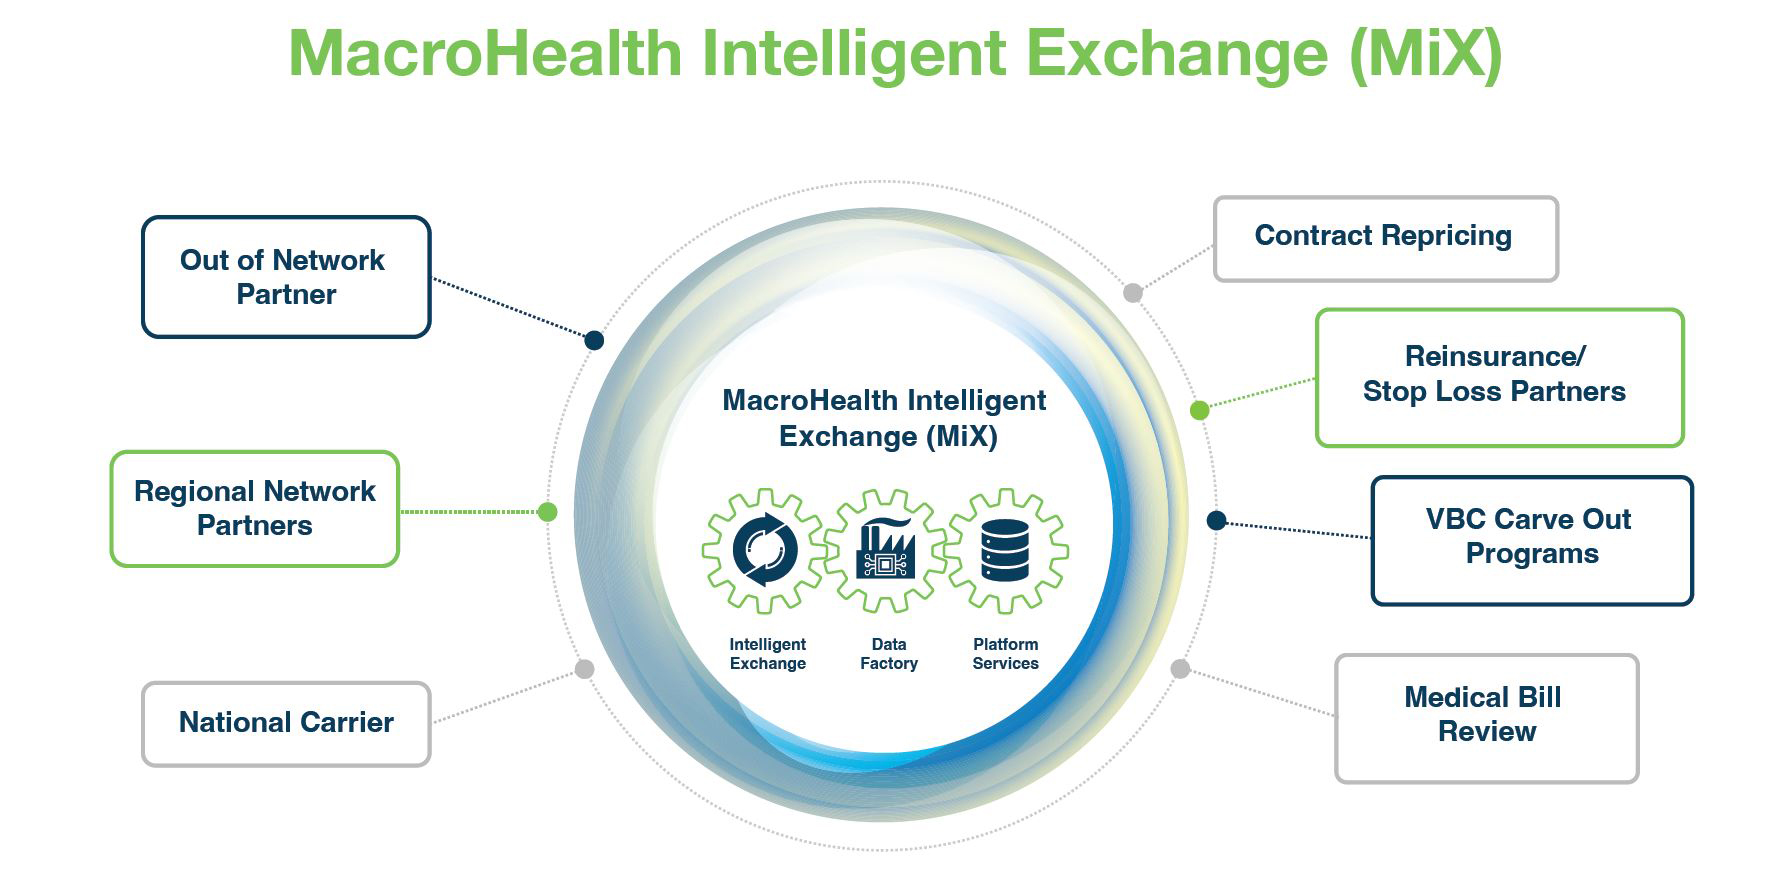 Components of the MacroHealth Intelligent Exchange platform